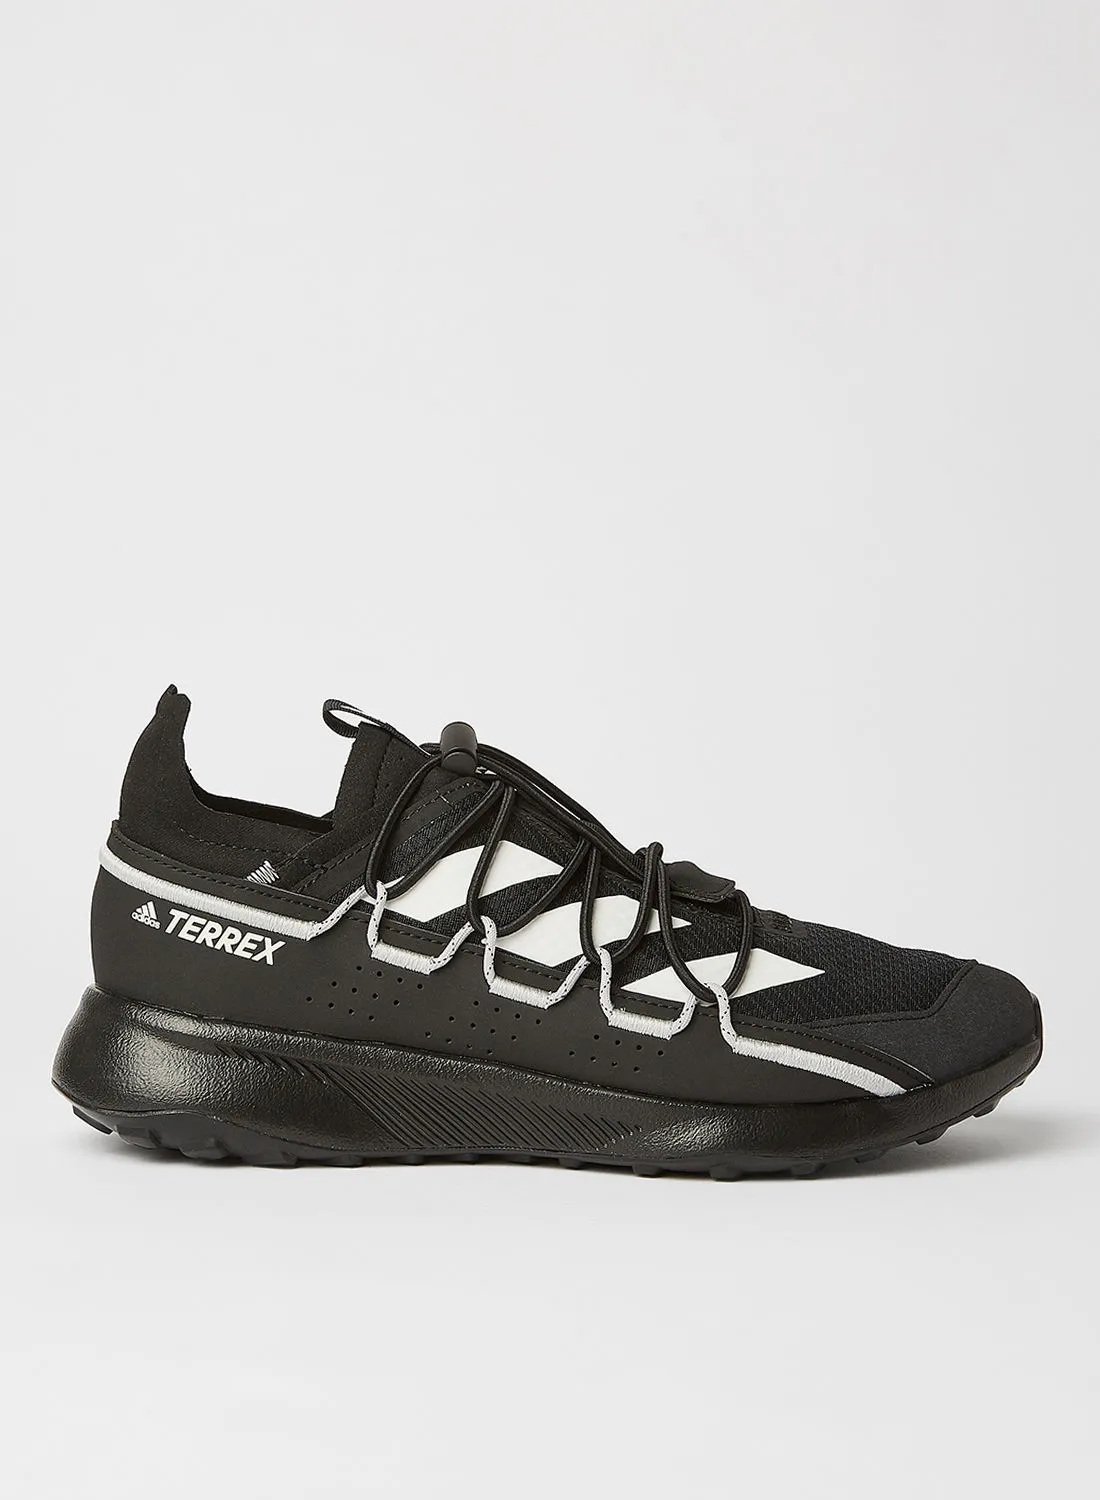 Adidas Terrex Voyager 21 Travel Shoes Black/White